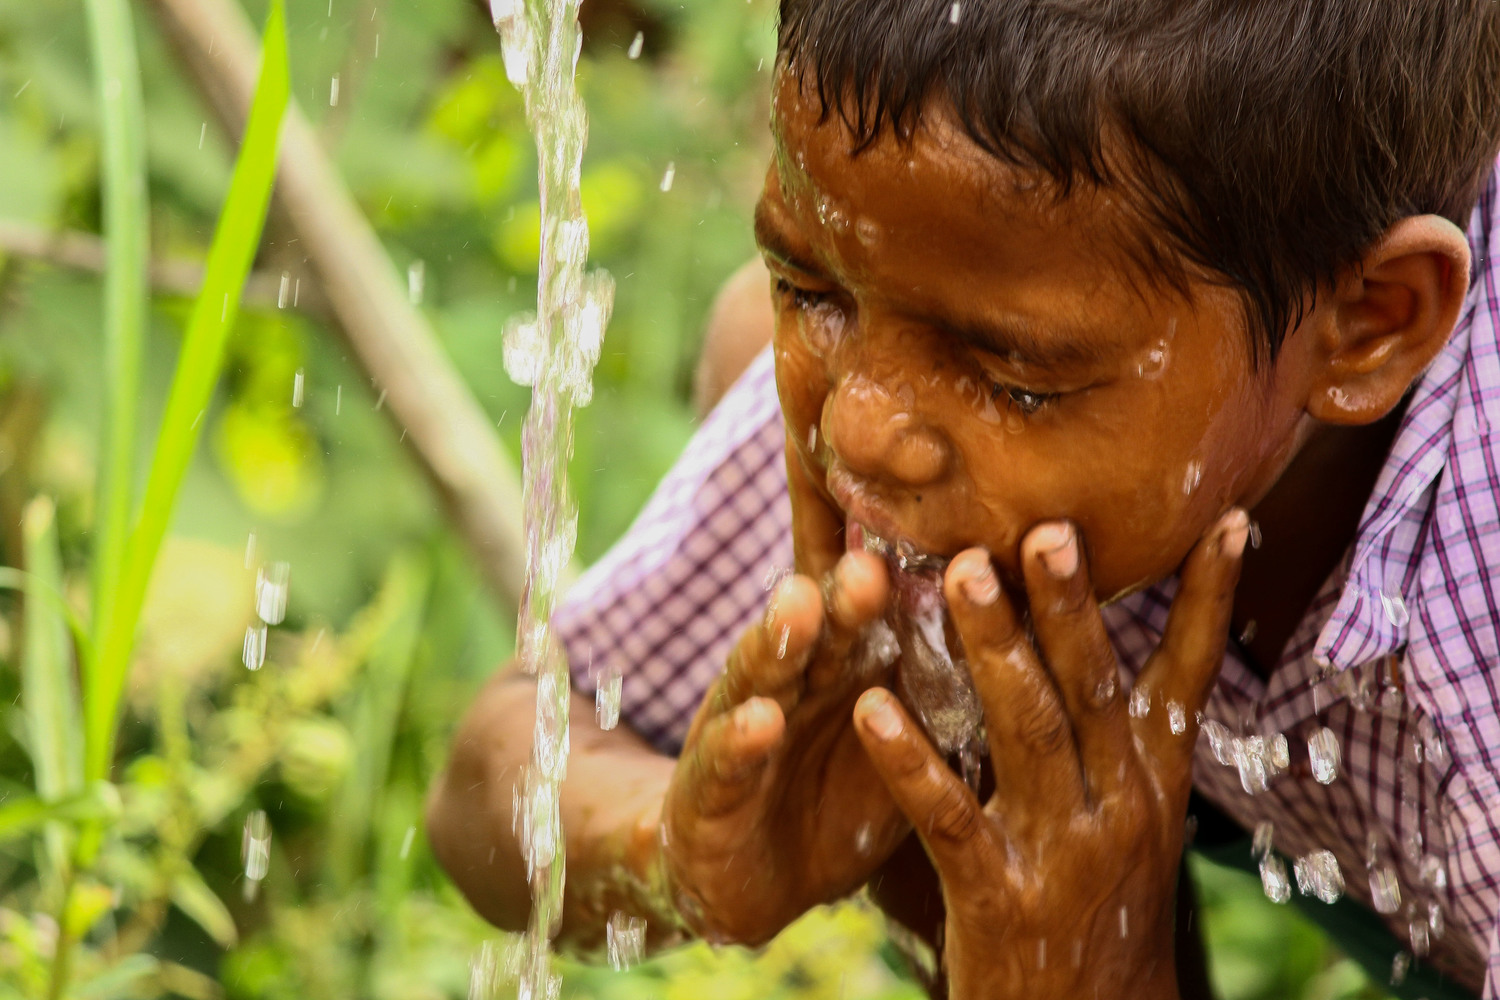 Frank Water WASH Face Clean Boy India Regular Giving Safe Water Sanitation Hygiene Support